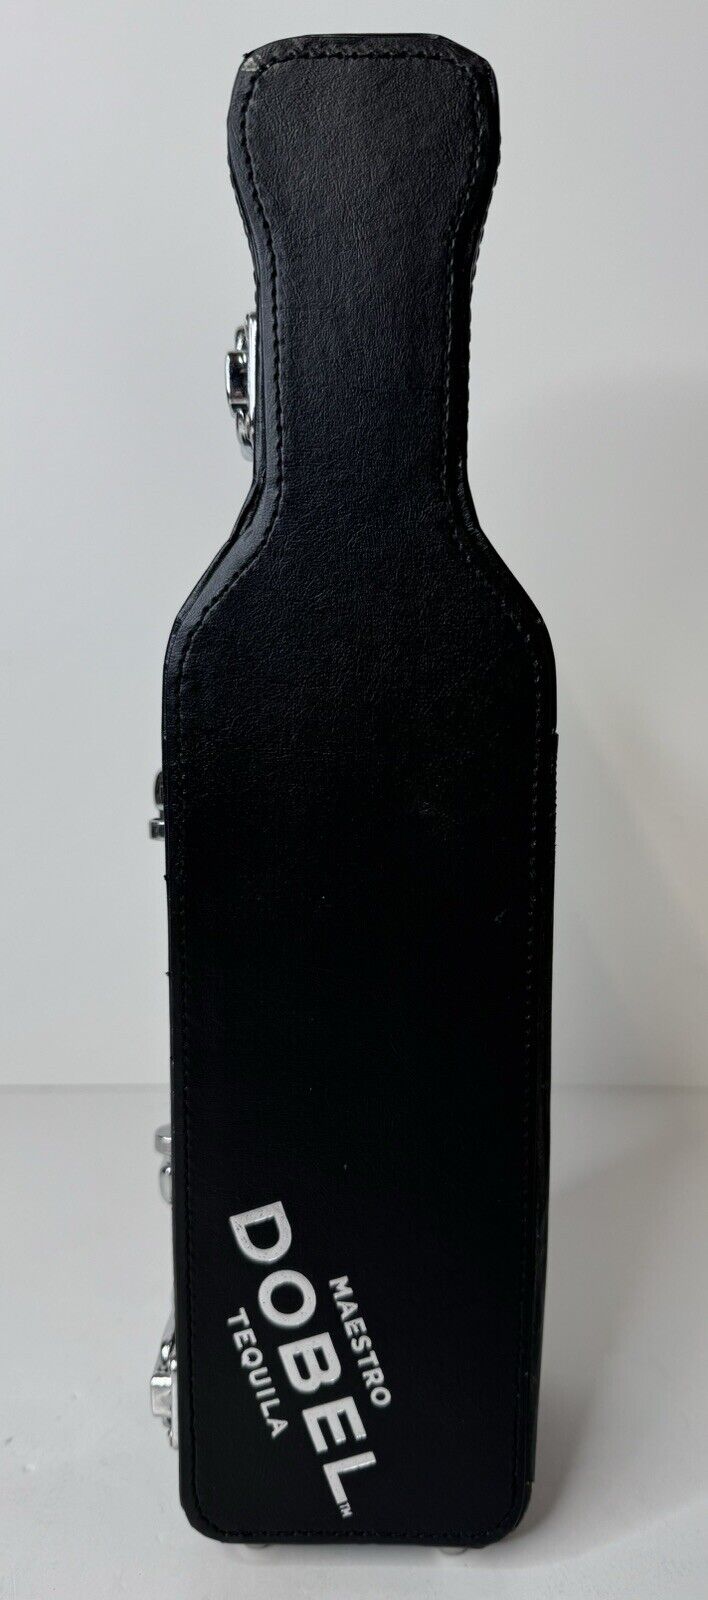 Maestro Dobel Tequila Limited Edition Black Guitar Case Empty Rare Collectible